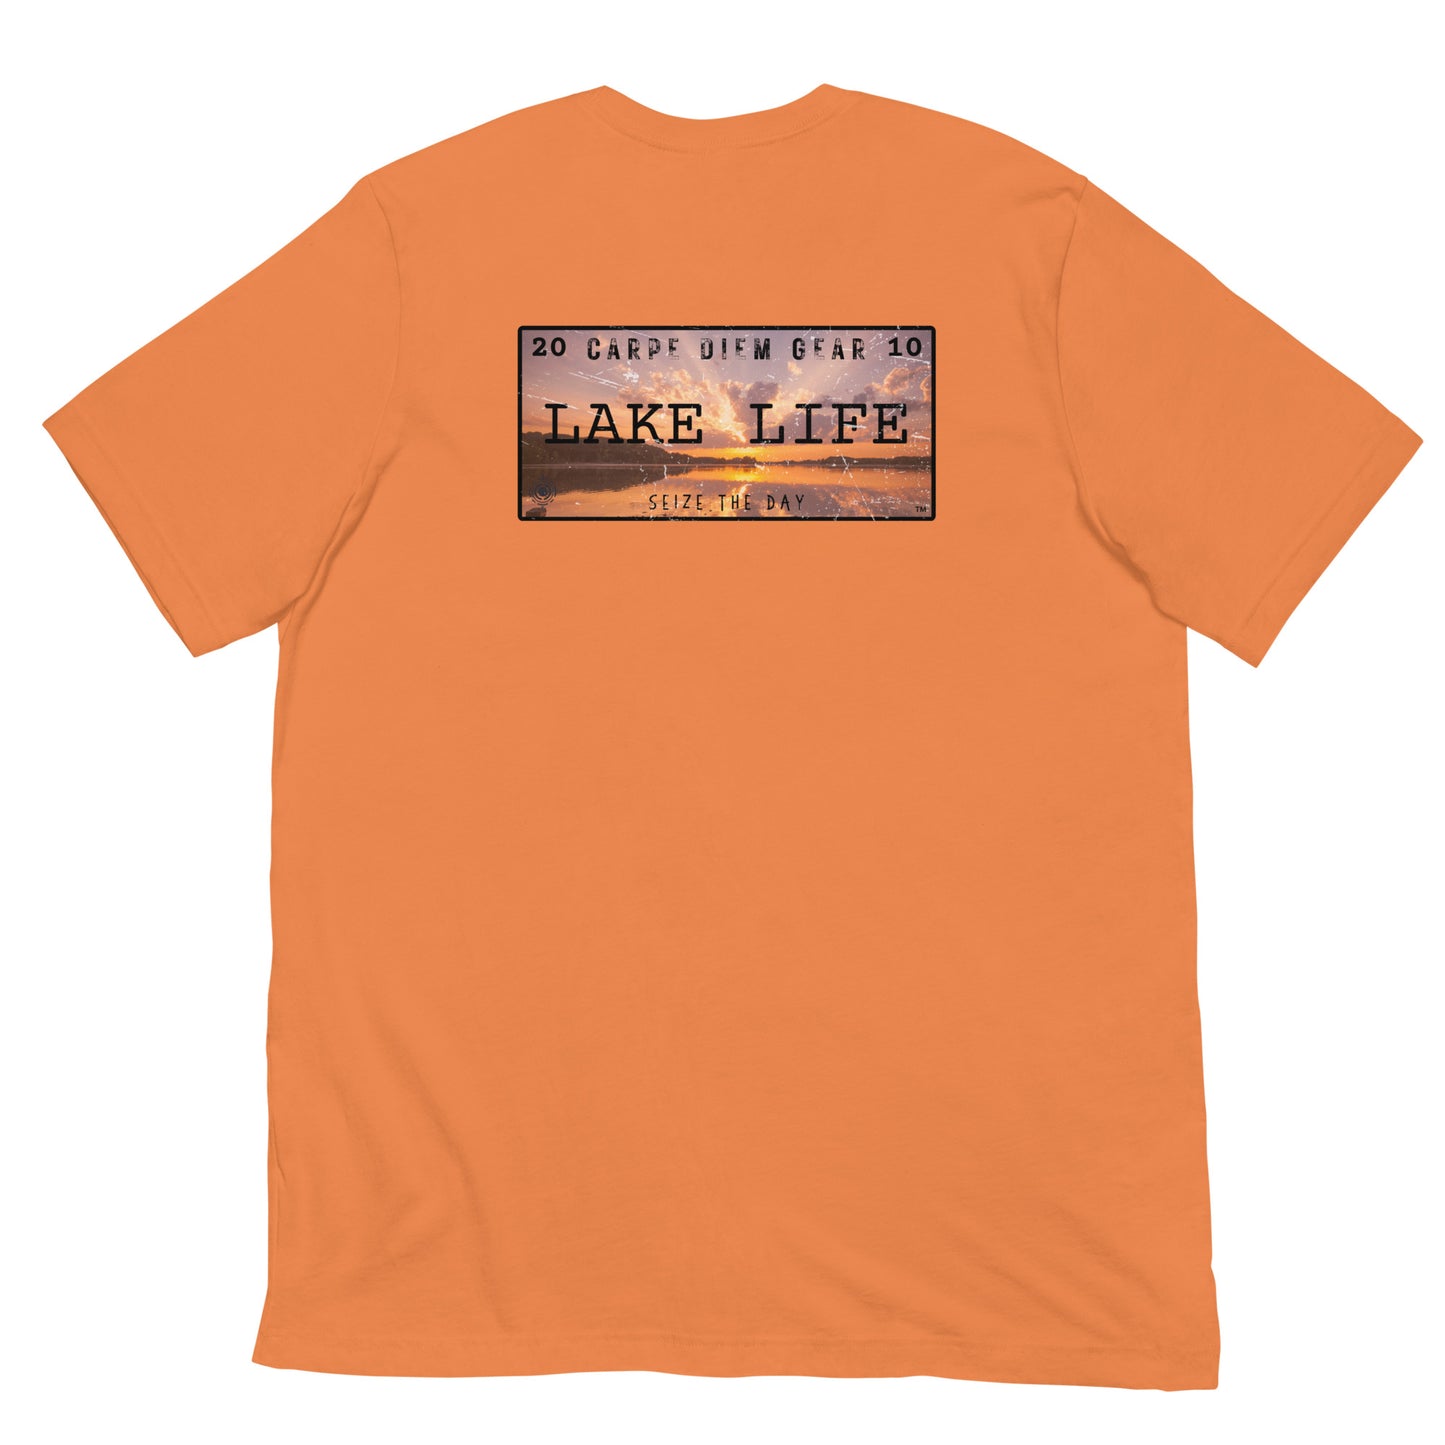 Carpe Diem Gear | Lake Life | Lake Life #1 DELUXE | Unisex 100% Cotton T-Shirt